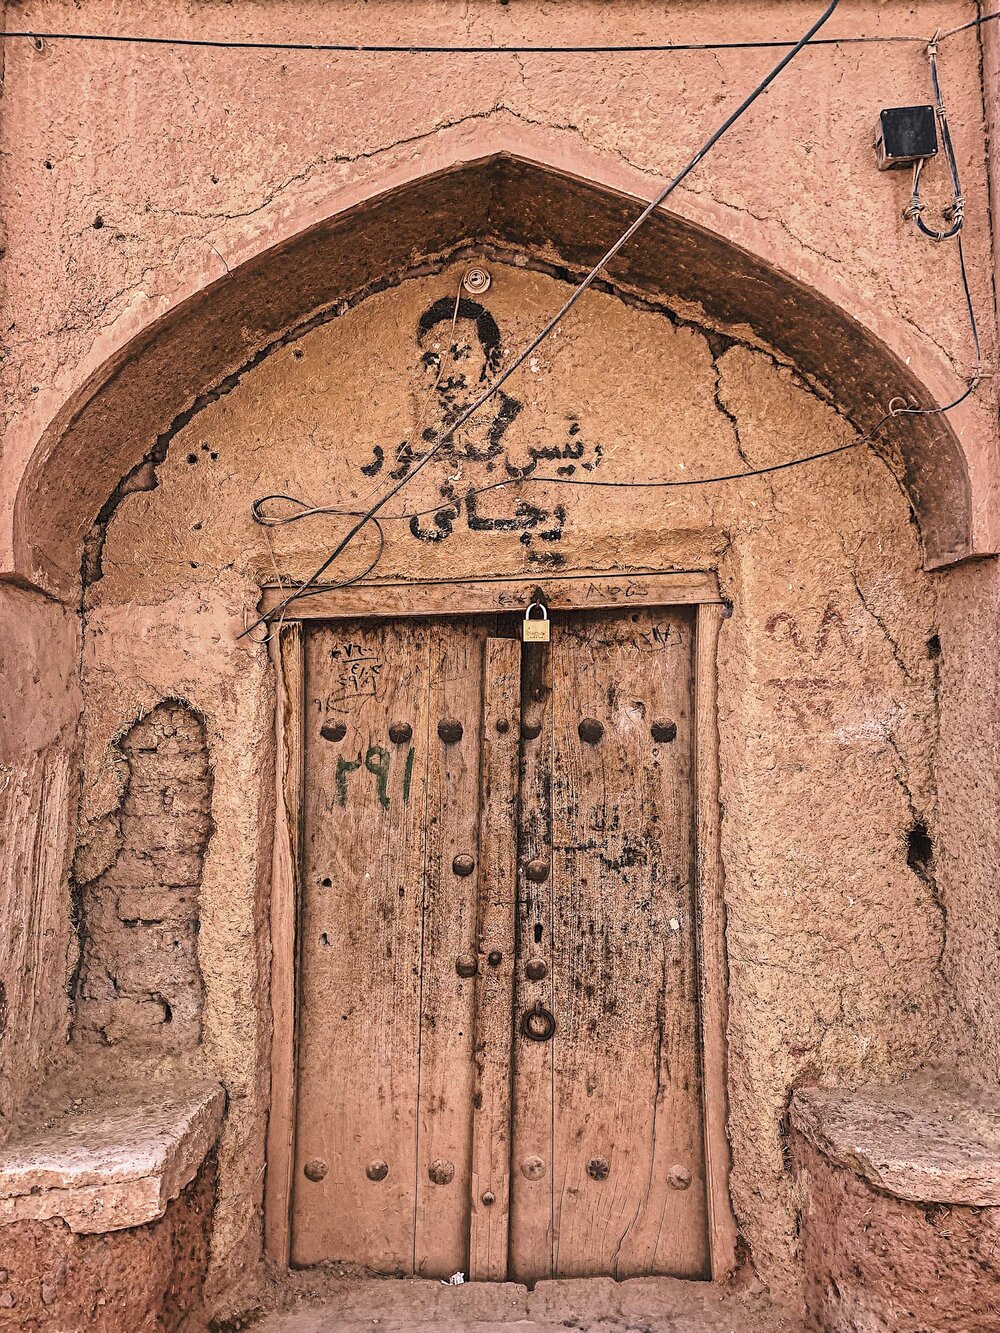 Decorated door, streets of Abyaneh, Iran